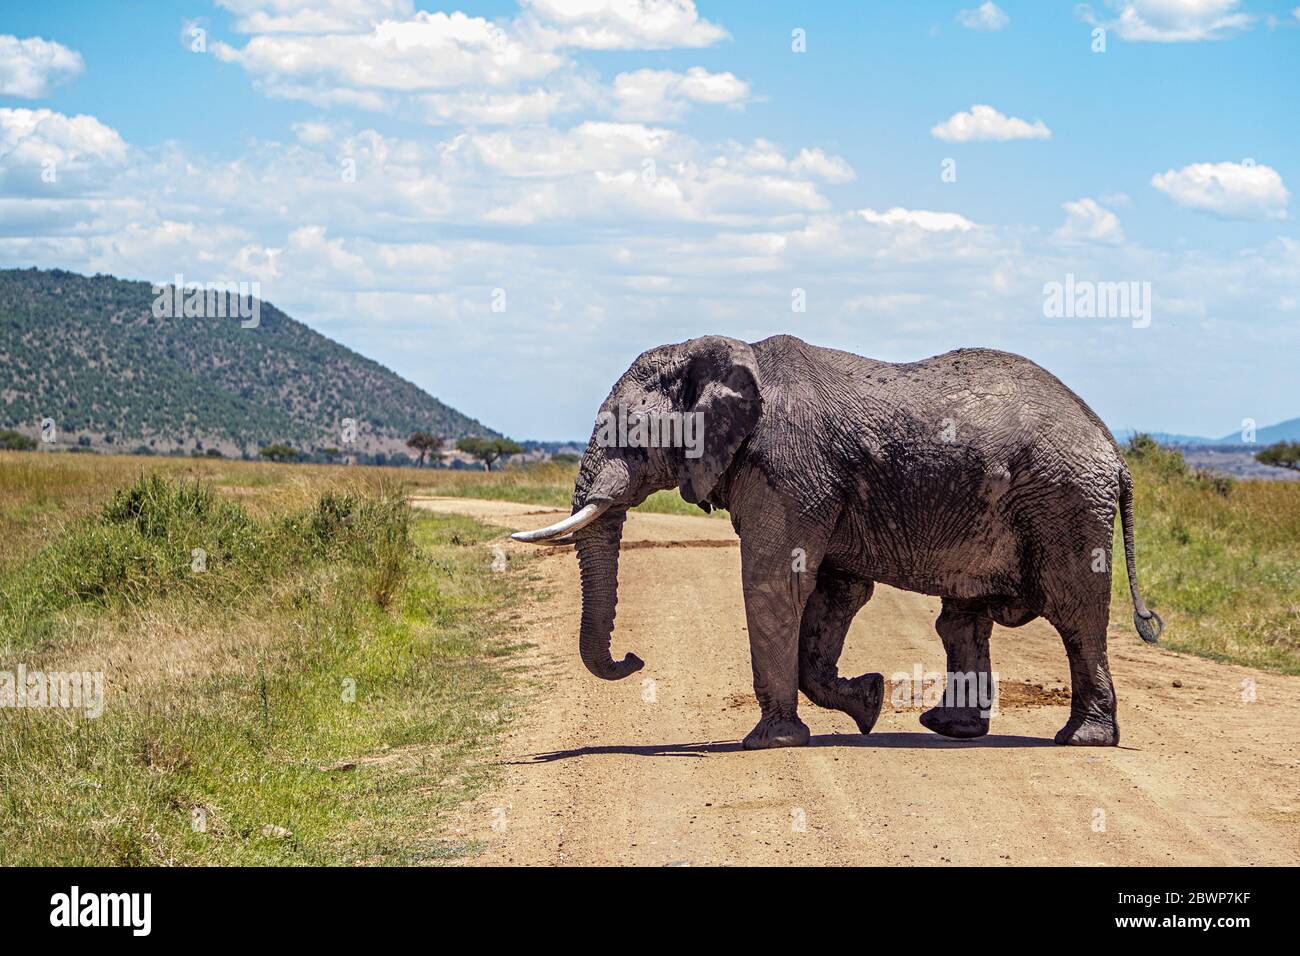 Large African elephant crossing road for safari vehicles in Masai Mara area of Kenya, Africa Stock Photo